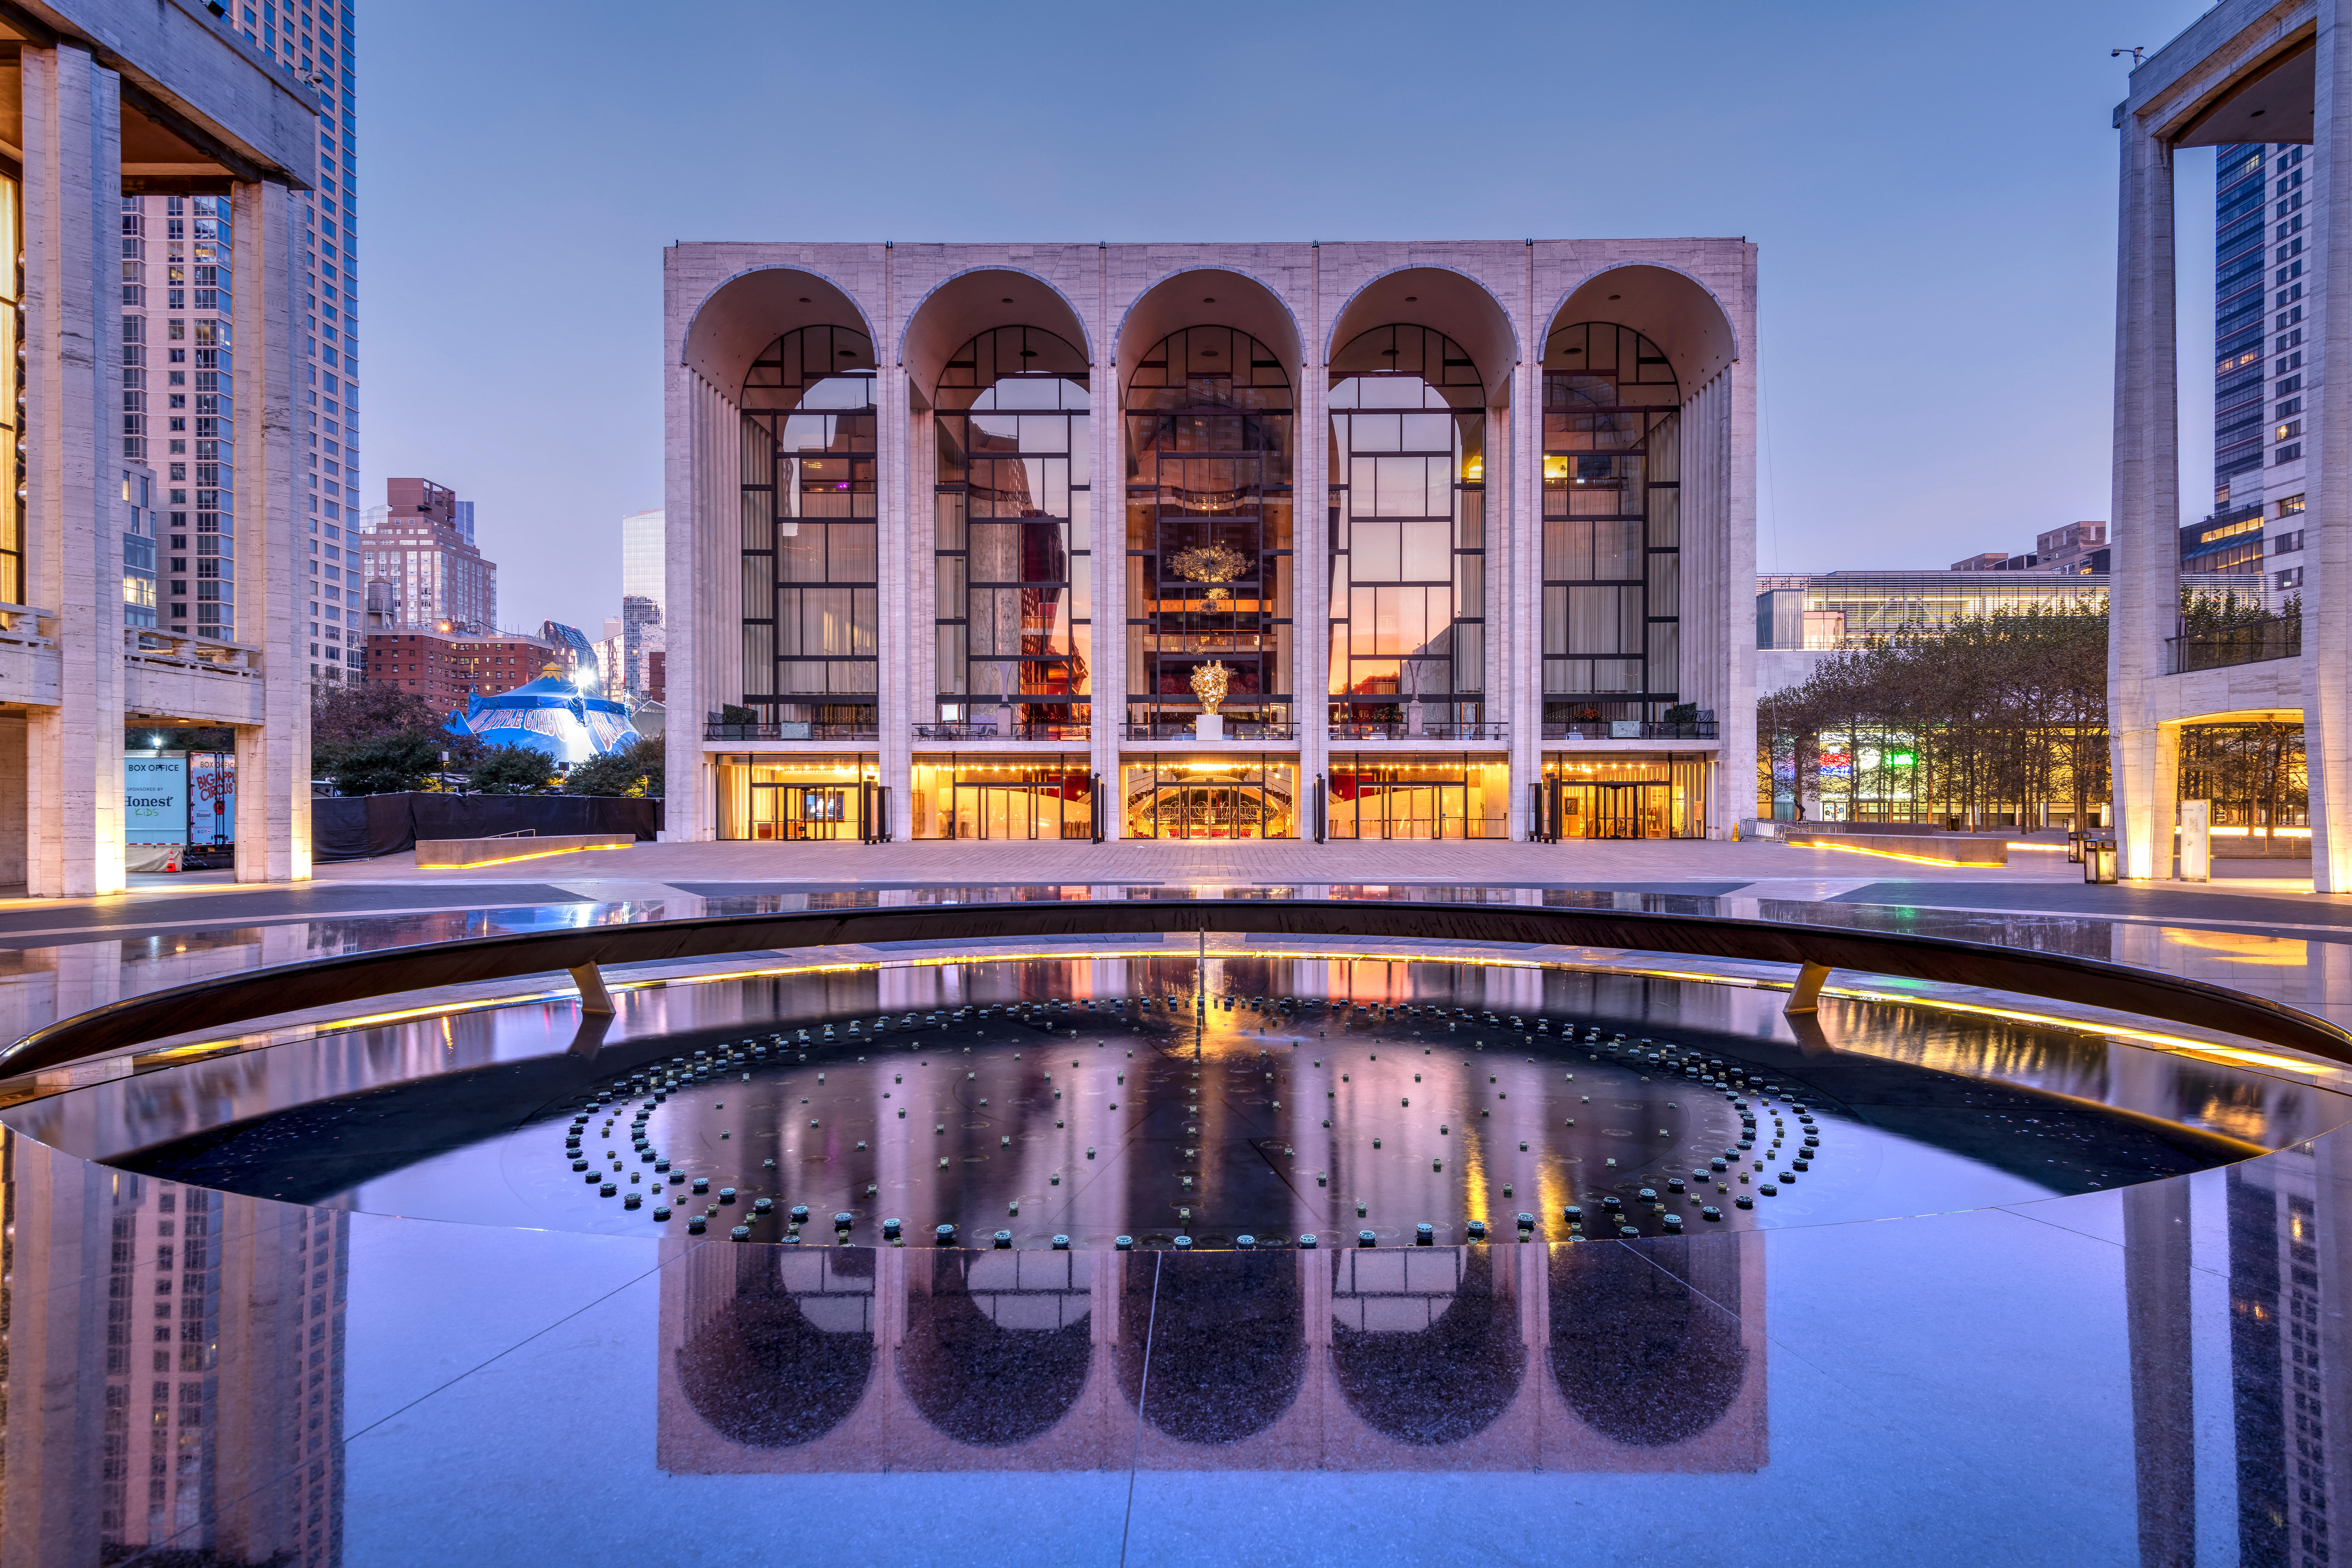 Metropolitan Opera House, Lincoln Center, Upper West Side, Manhattan, New York, USA